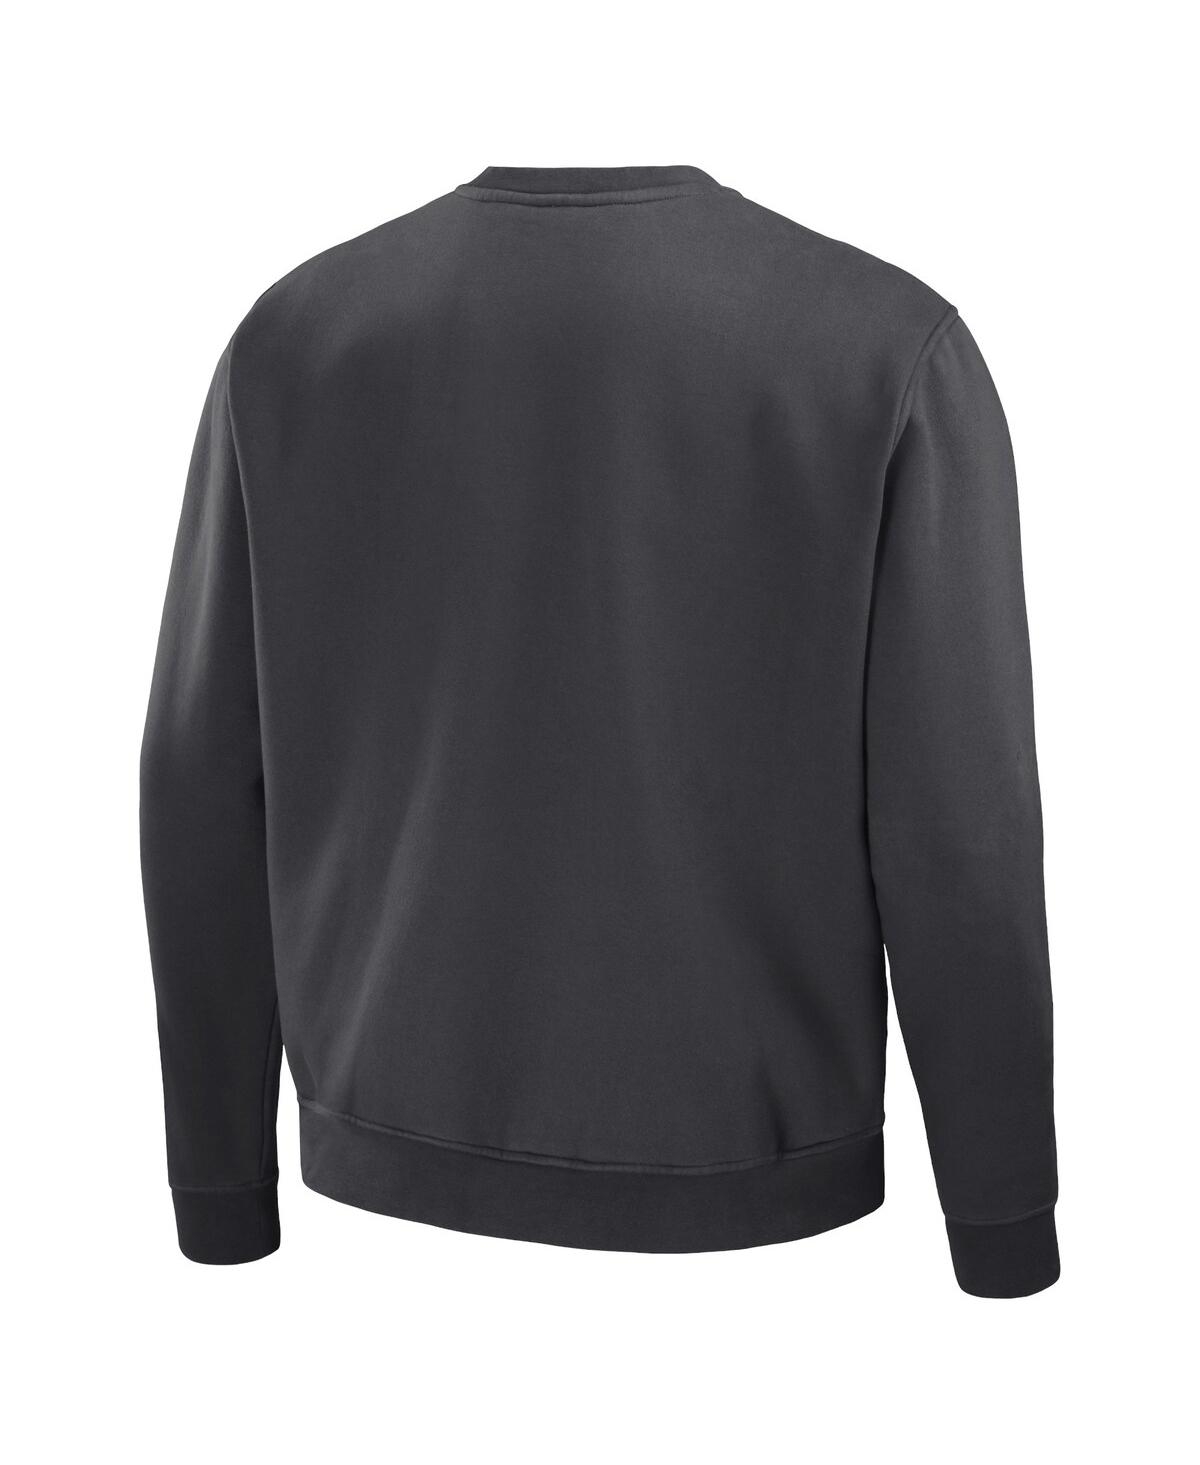 Shop Staple Men's Nba X  Anthracite Washington Wizards Plush Pullover Sweatshirt